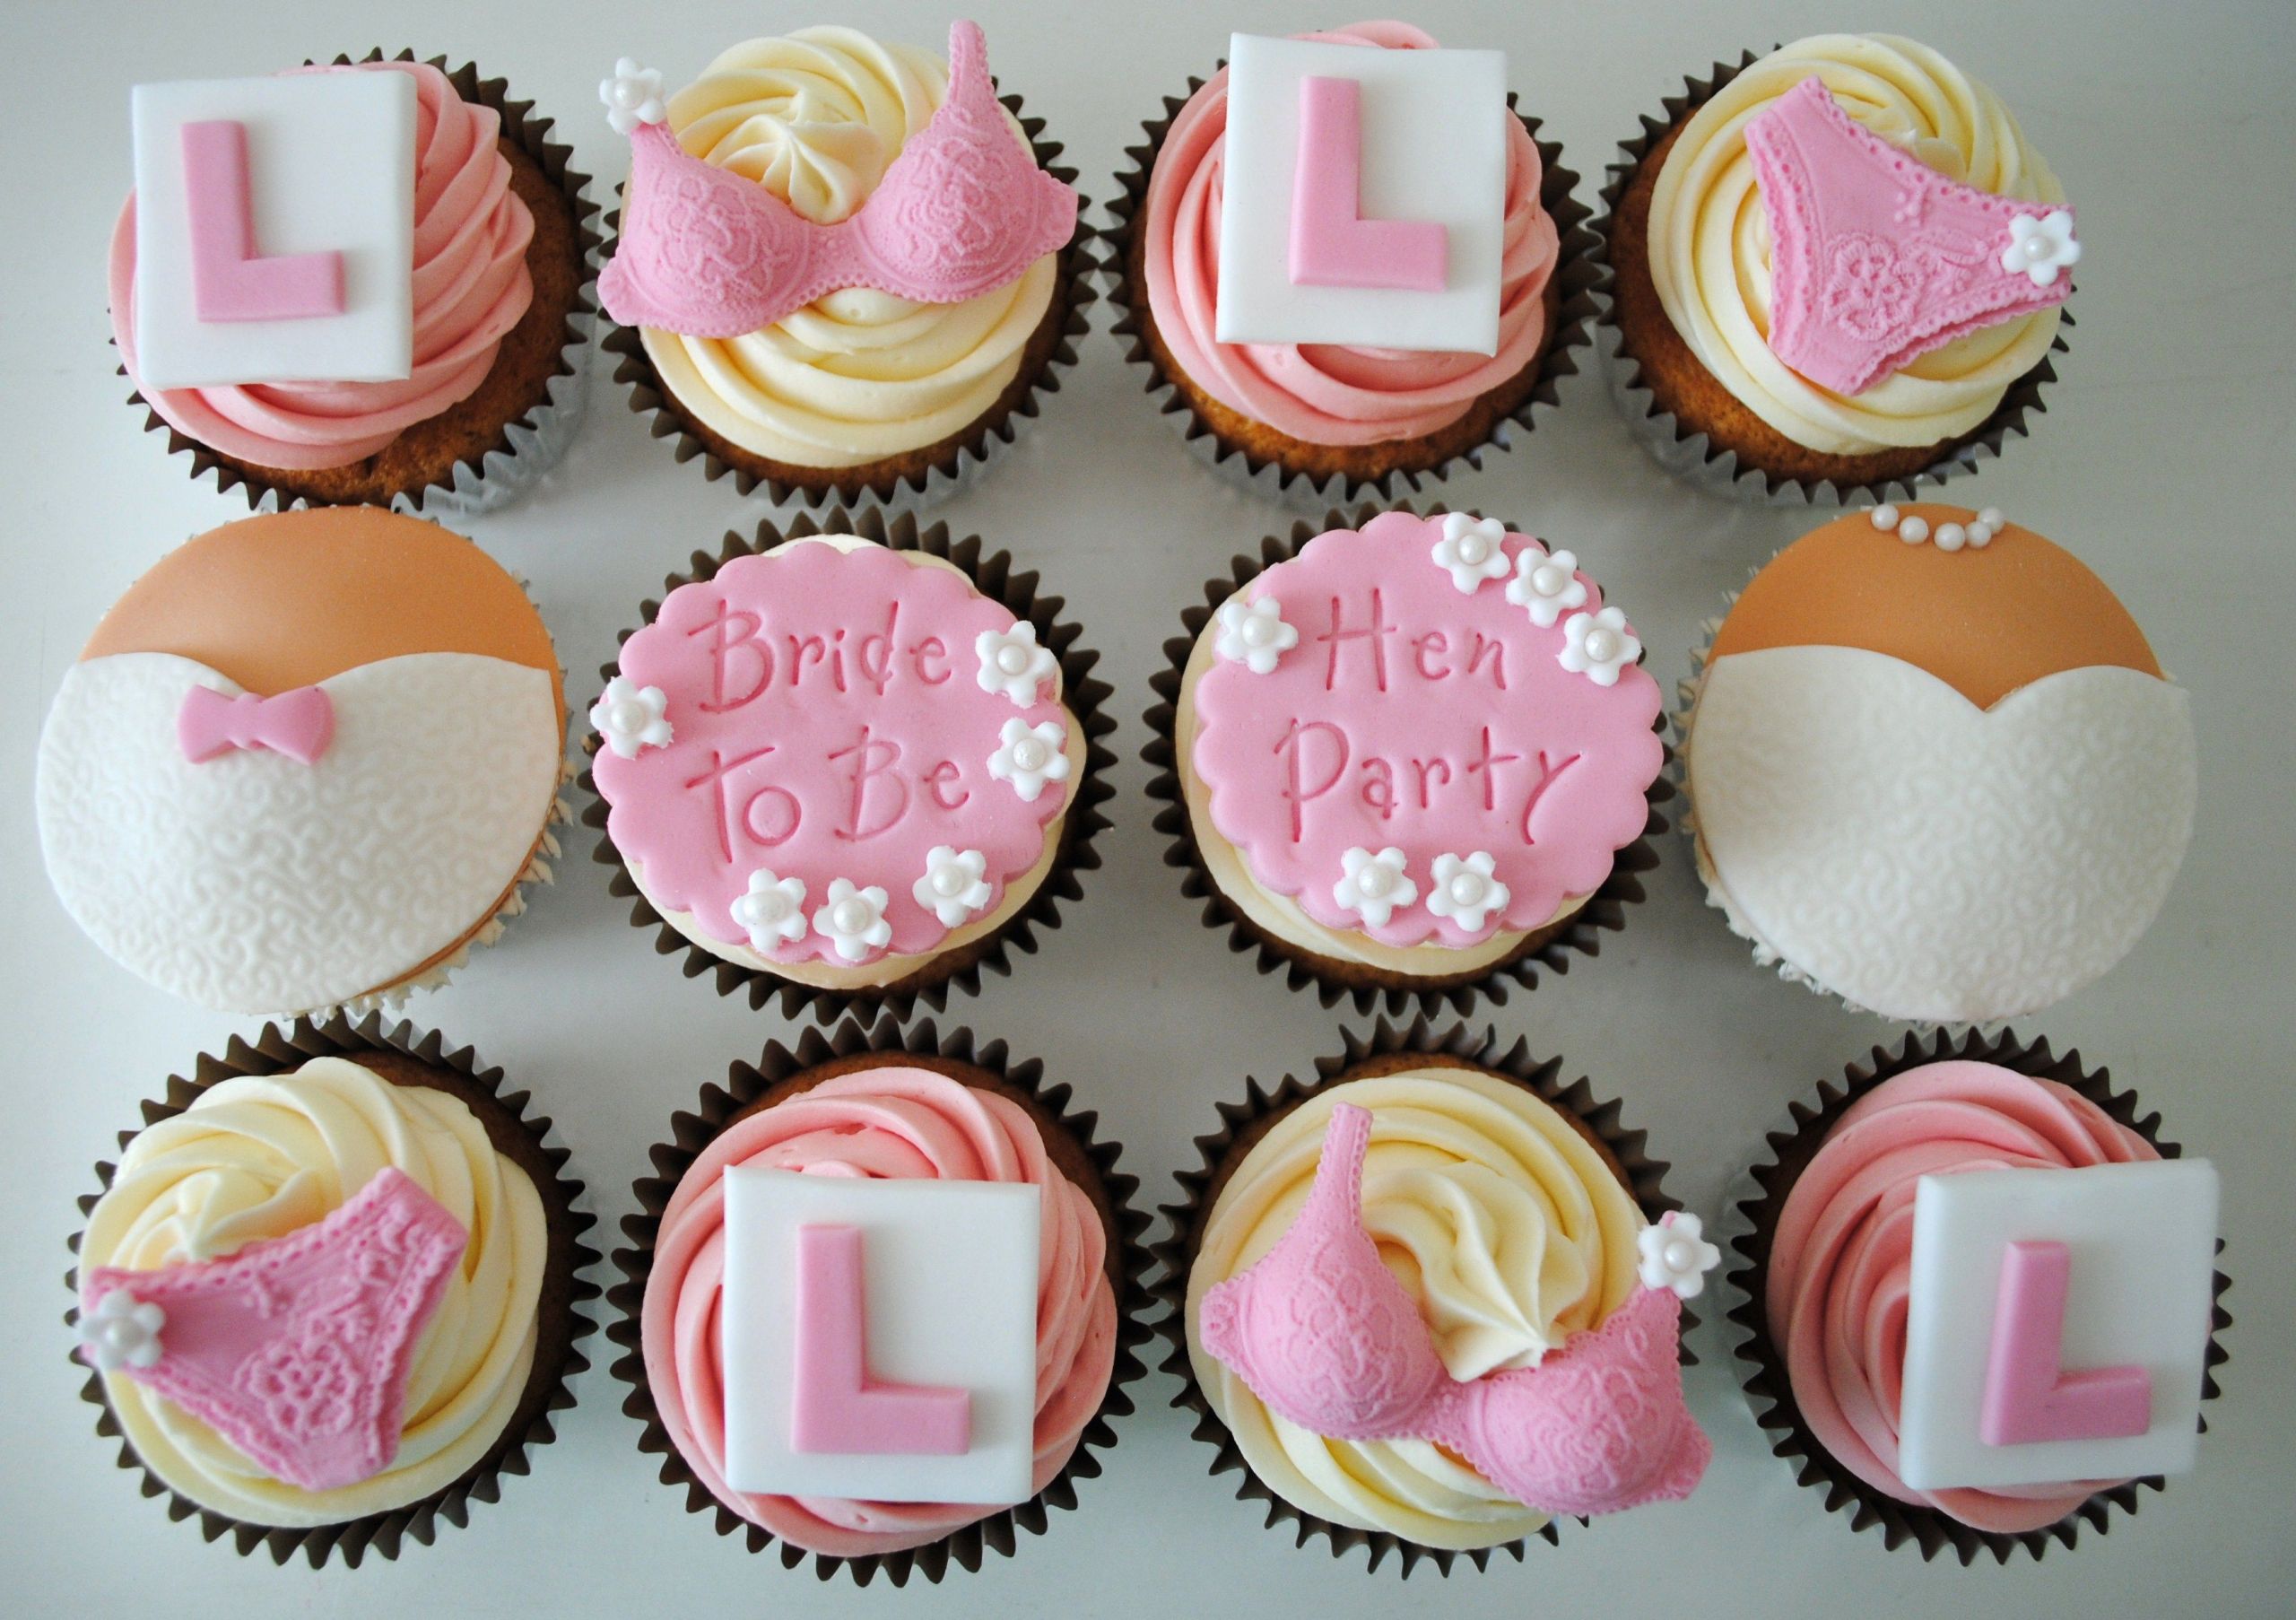 Bachelorette Party Cupcake Ideas
 Hen s party cupcakes